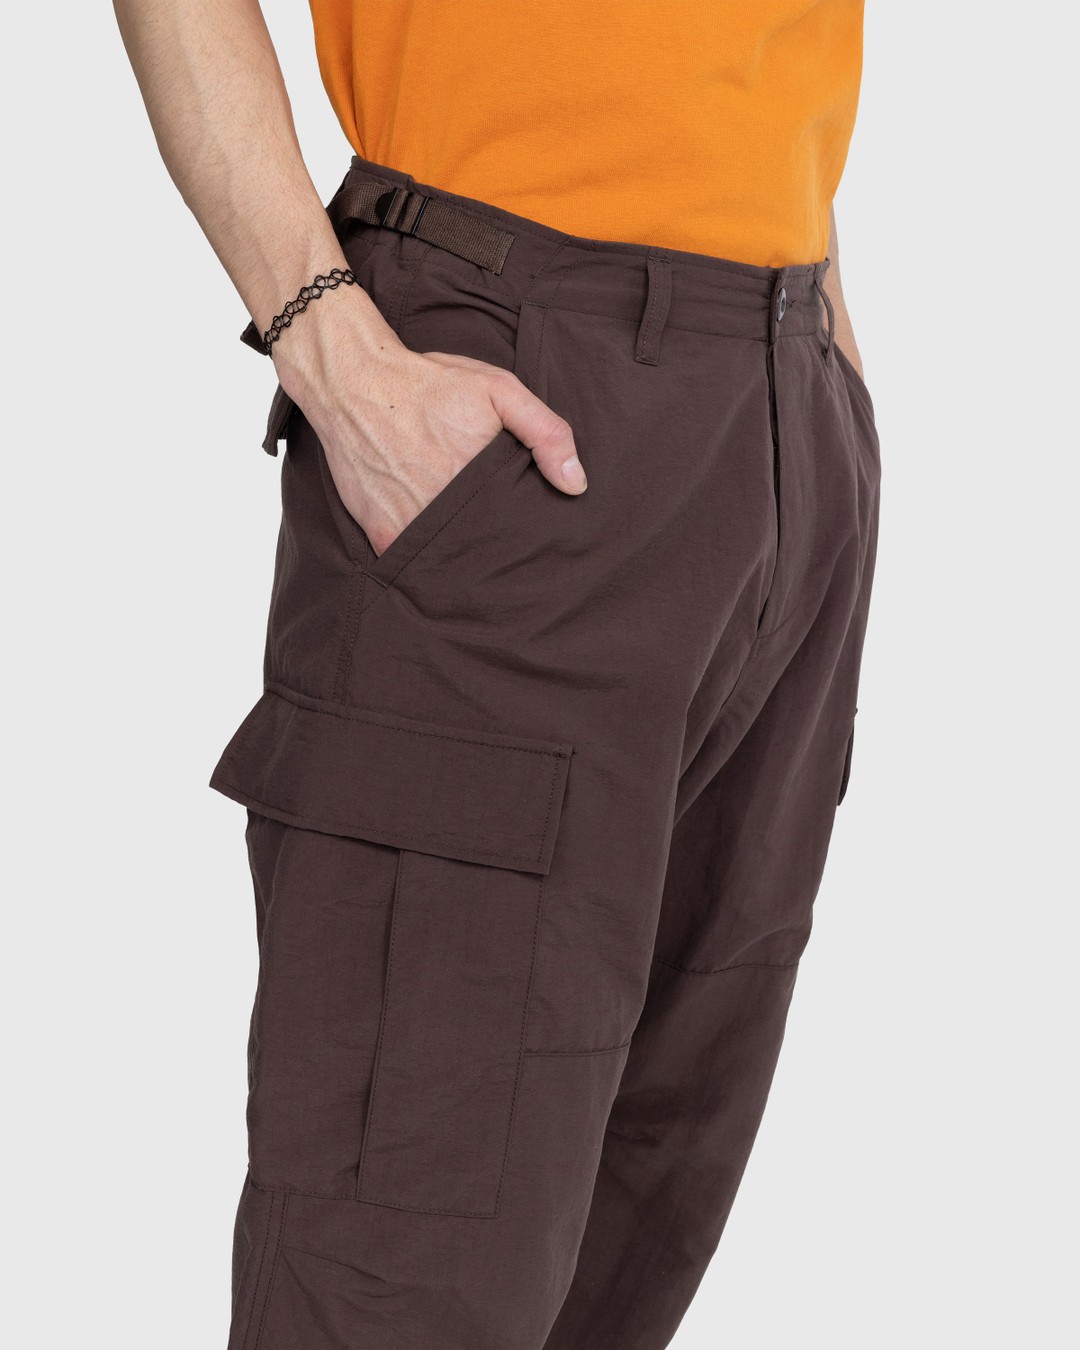 Highsnobiety – Nylon Cargo Pants Brown - Pants - Brown - Image 5